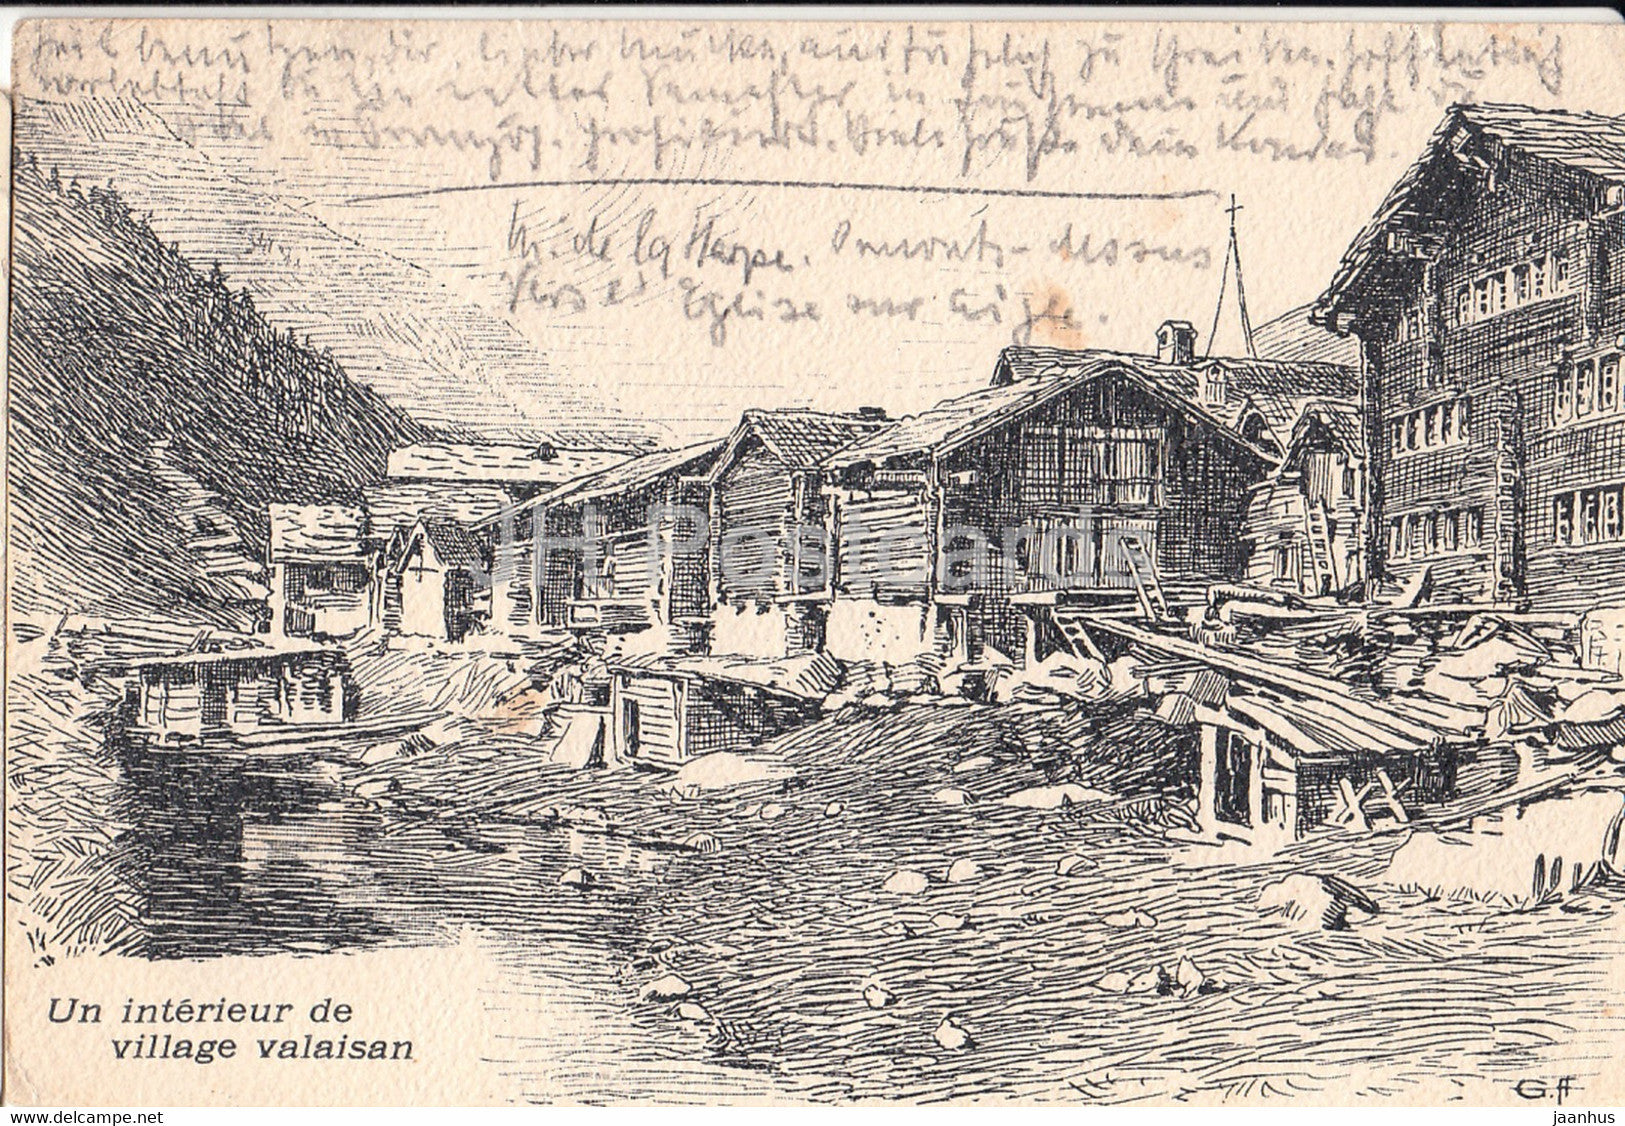 Un Interieur de village Valaisan - illustration - 1911 - old postcard - Switzerland - used - JH Postcards